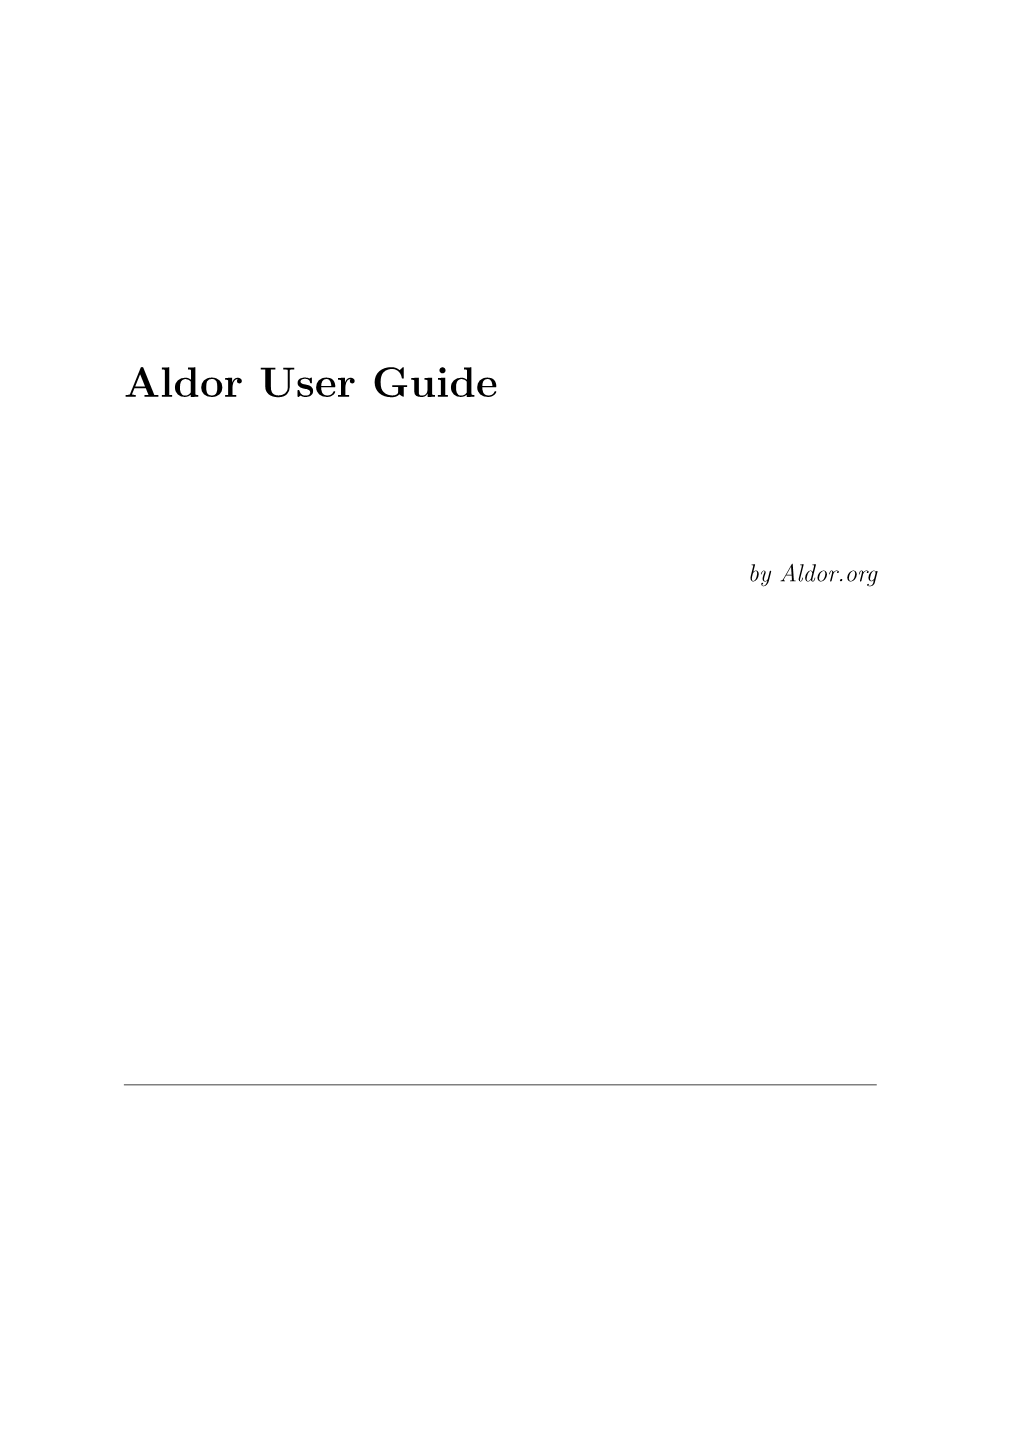 Aldor User Guide